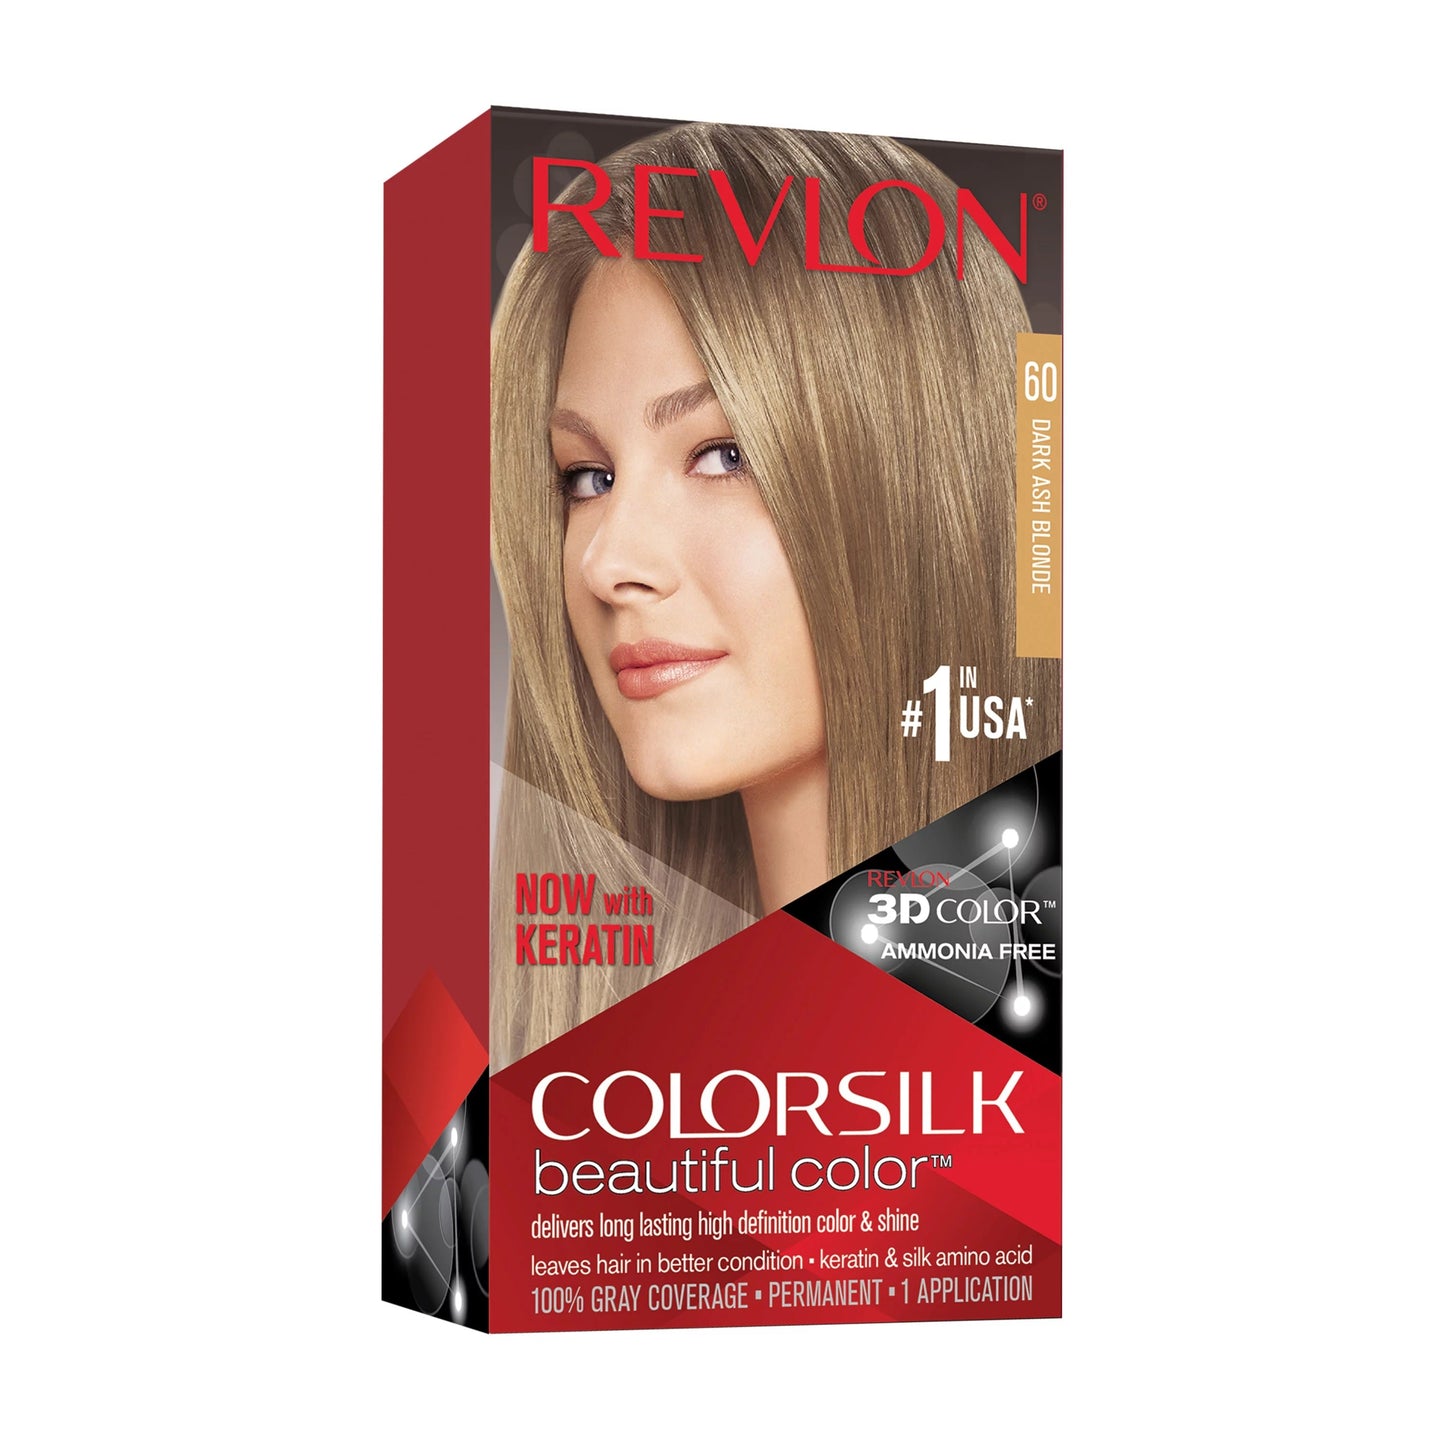 Revlon Colorsilk Hair Color 60 Dark Ash Blonde USA - 1ct/3PK